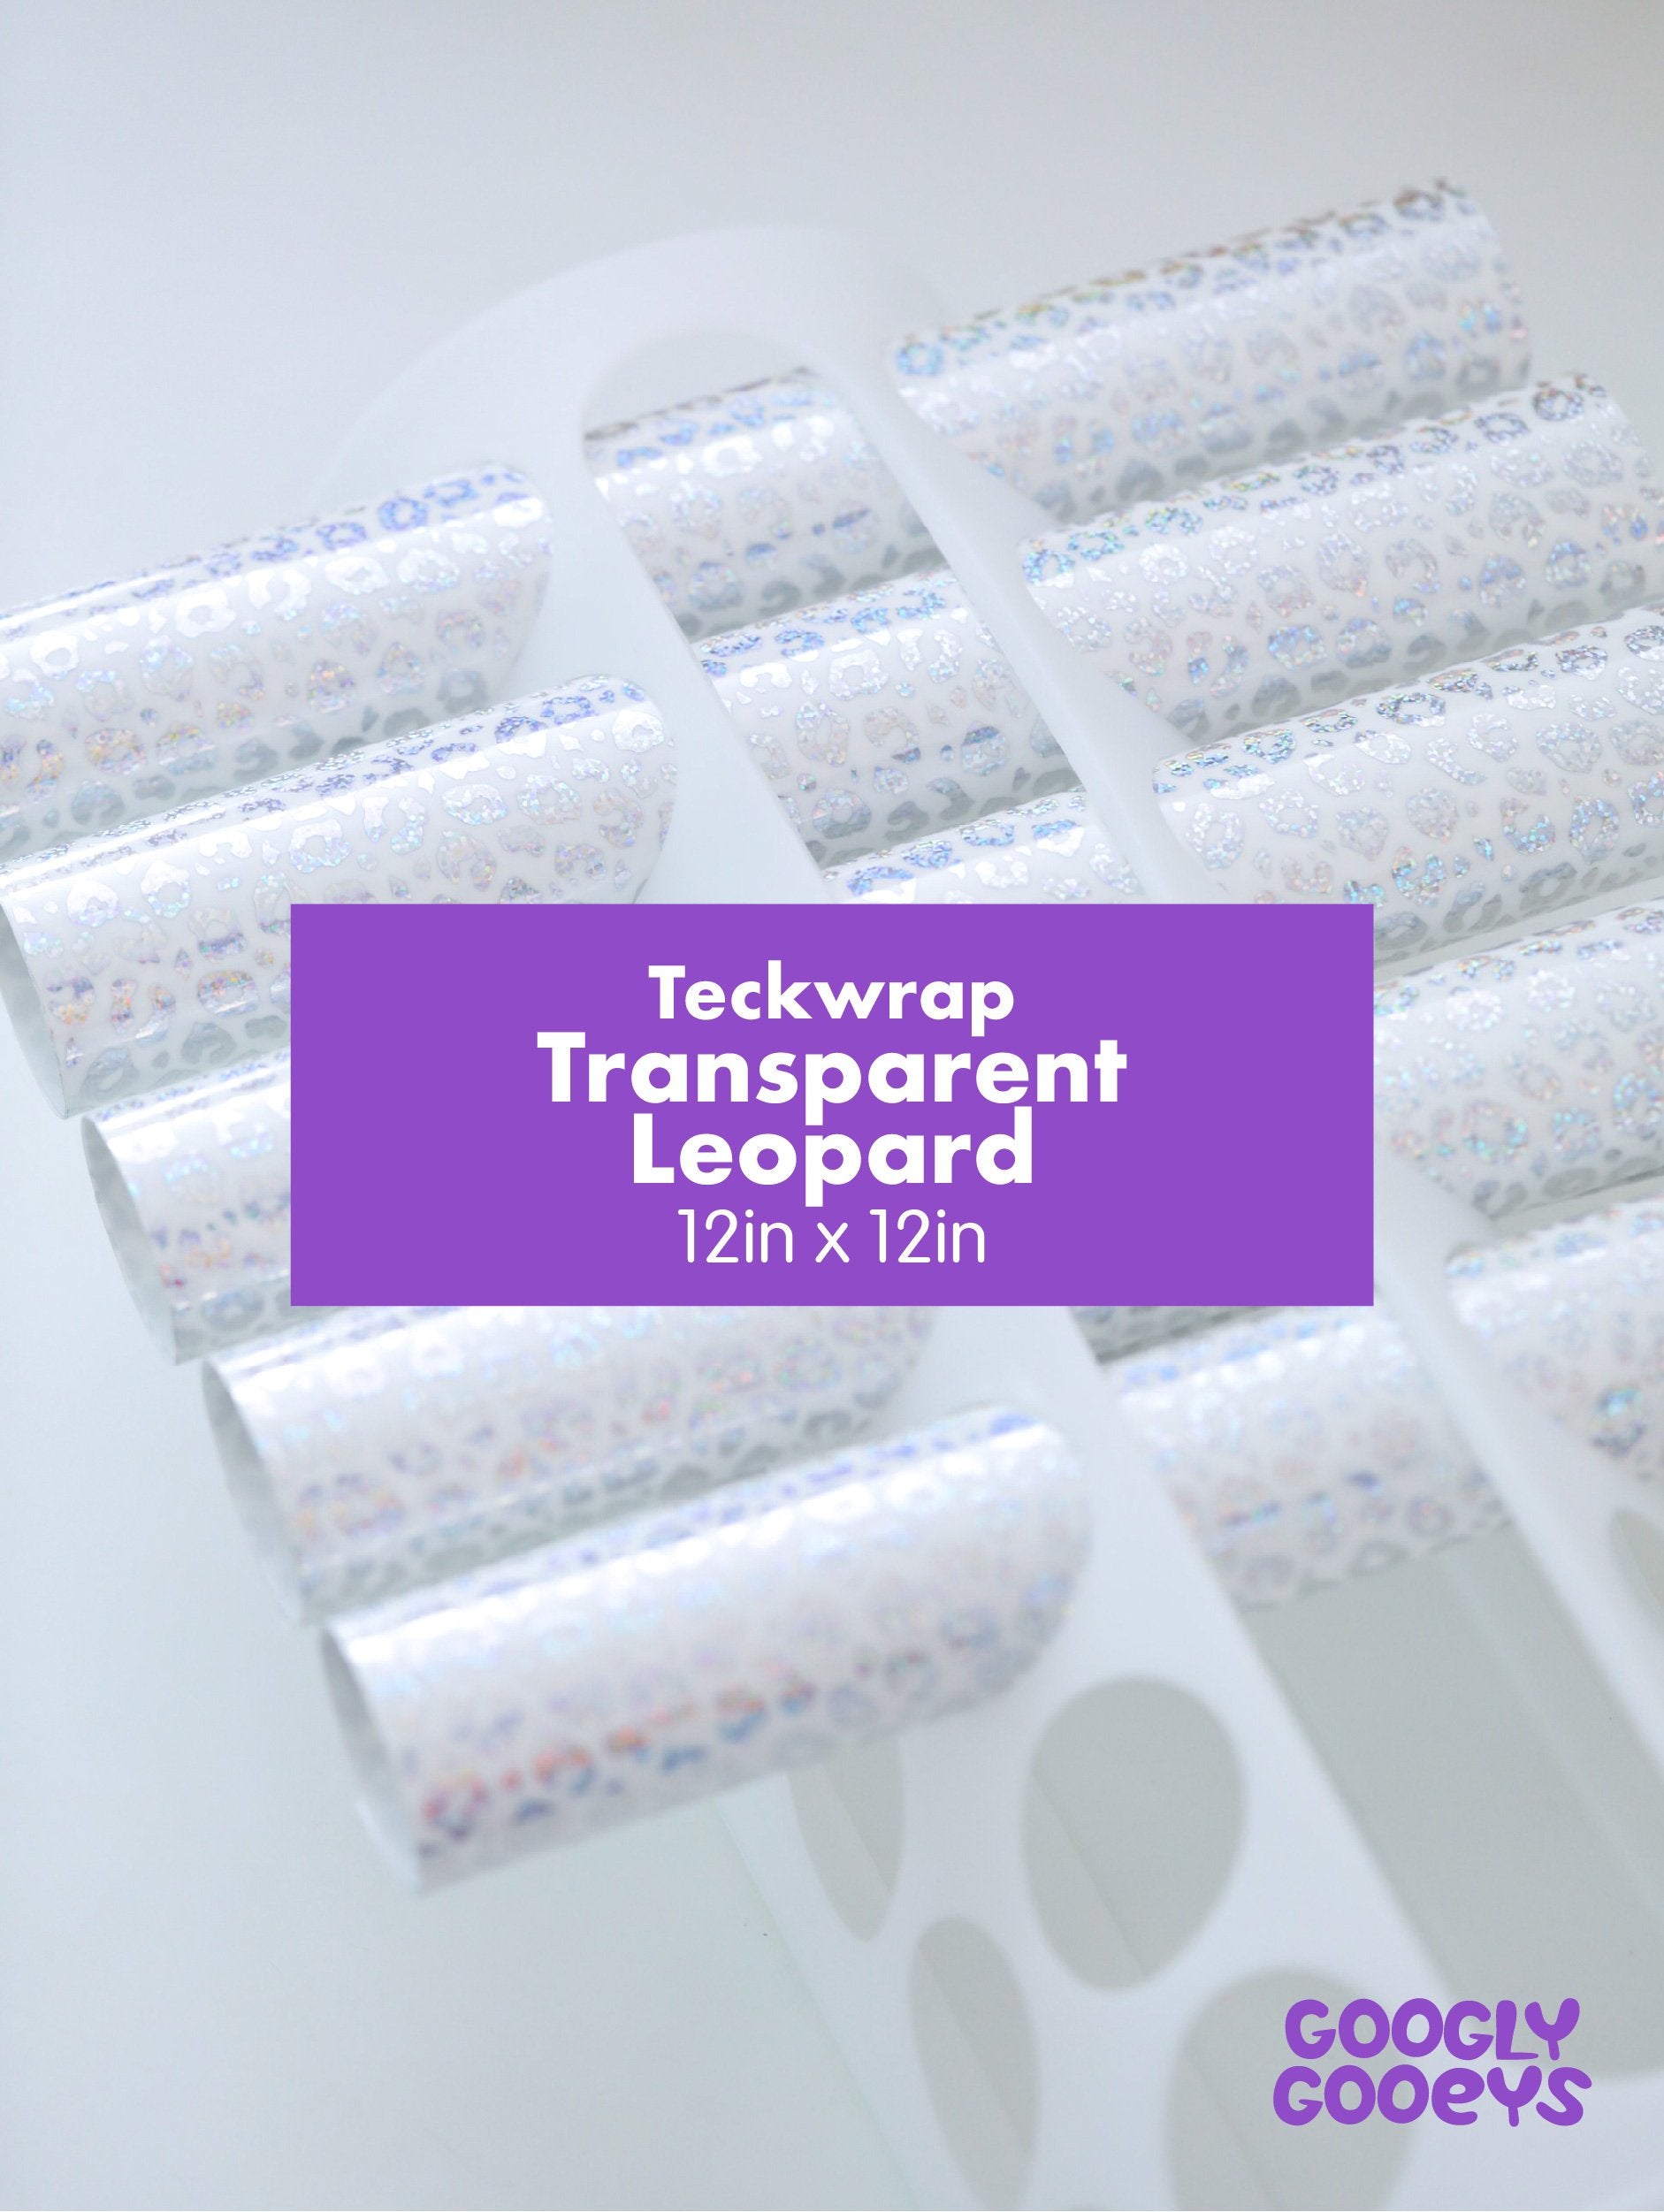 Teckwrap Holographic Pattern Adhesive Vinyl Stickers (12x12)